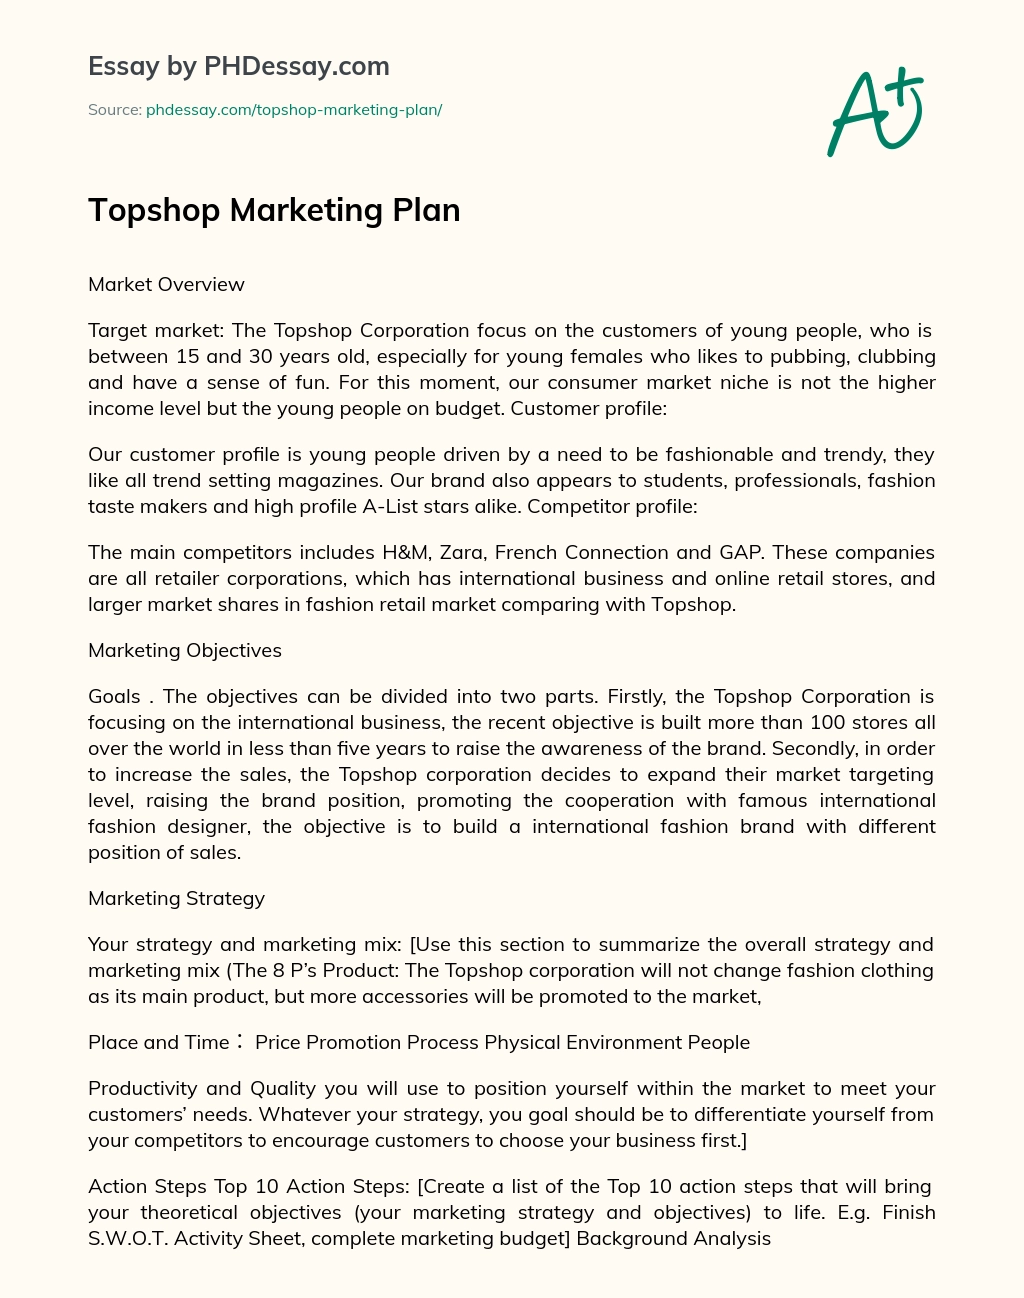 Topshop Marketing Plan essay